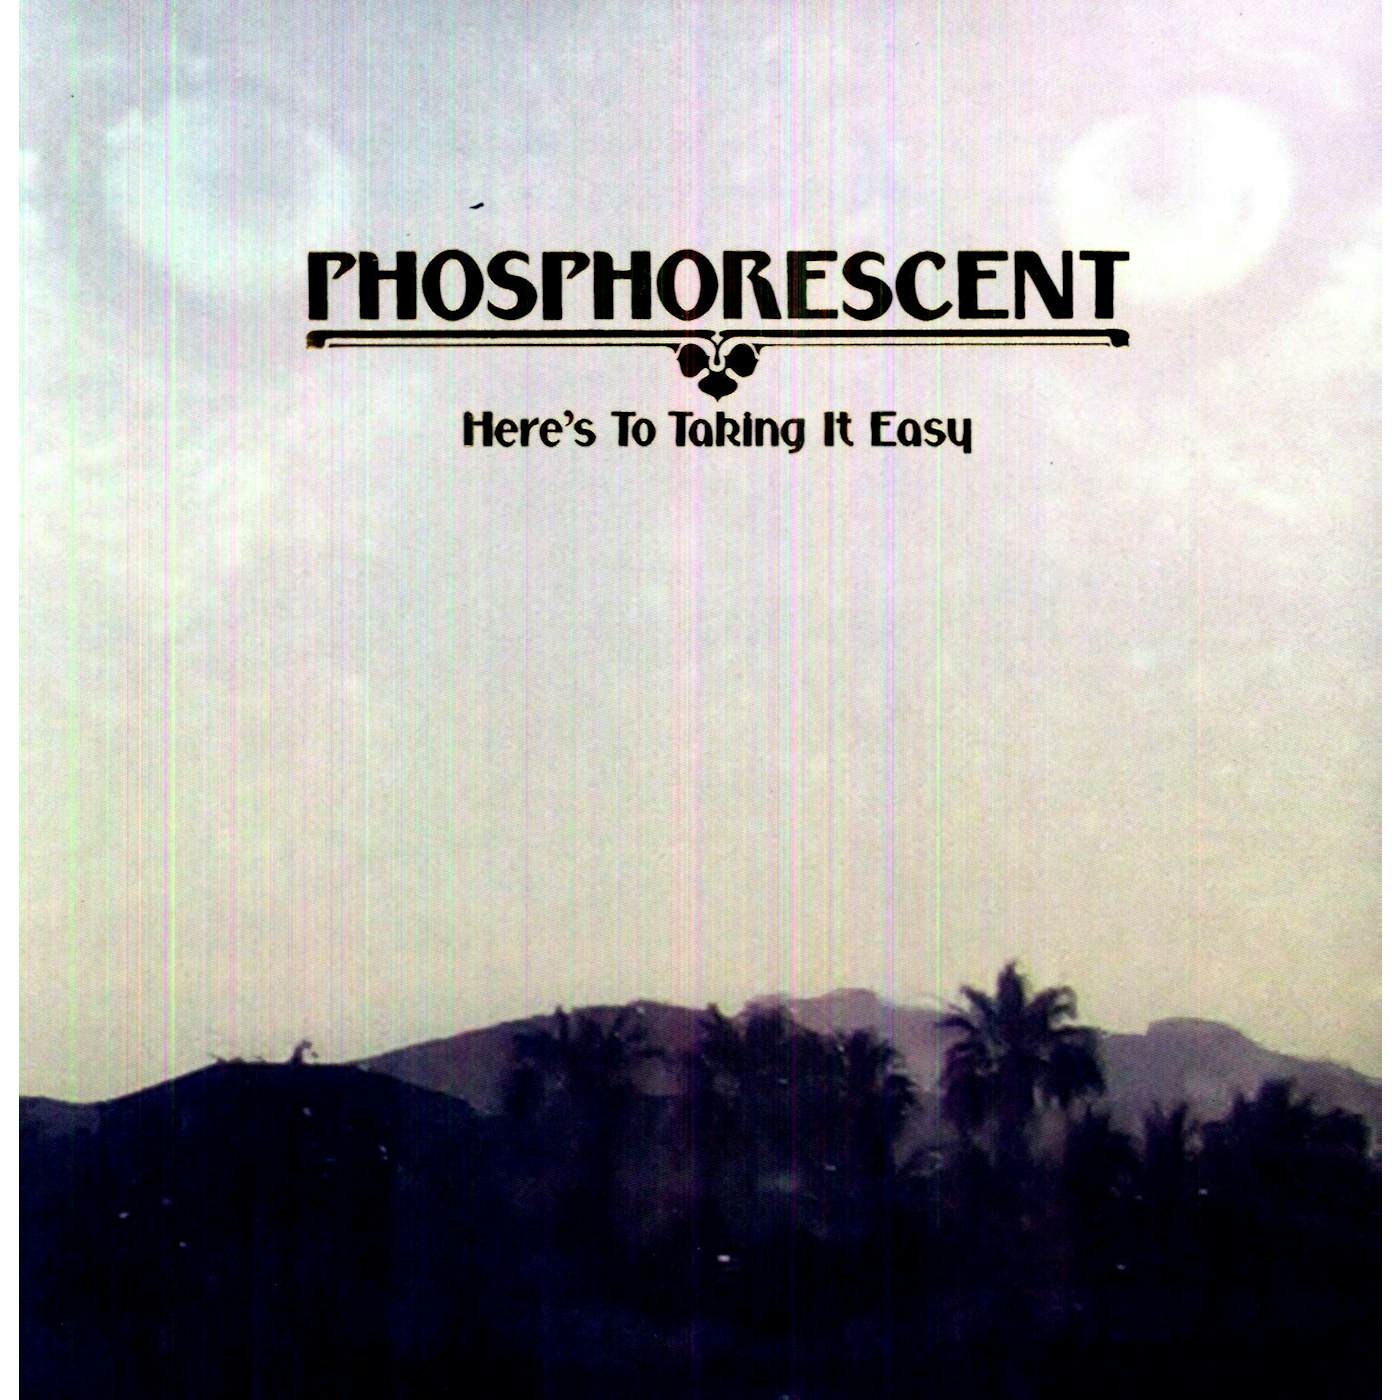 Phosphorescent Here's To Taking It Easy Vinyl Record